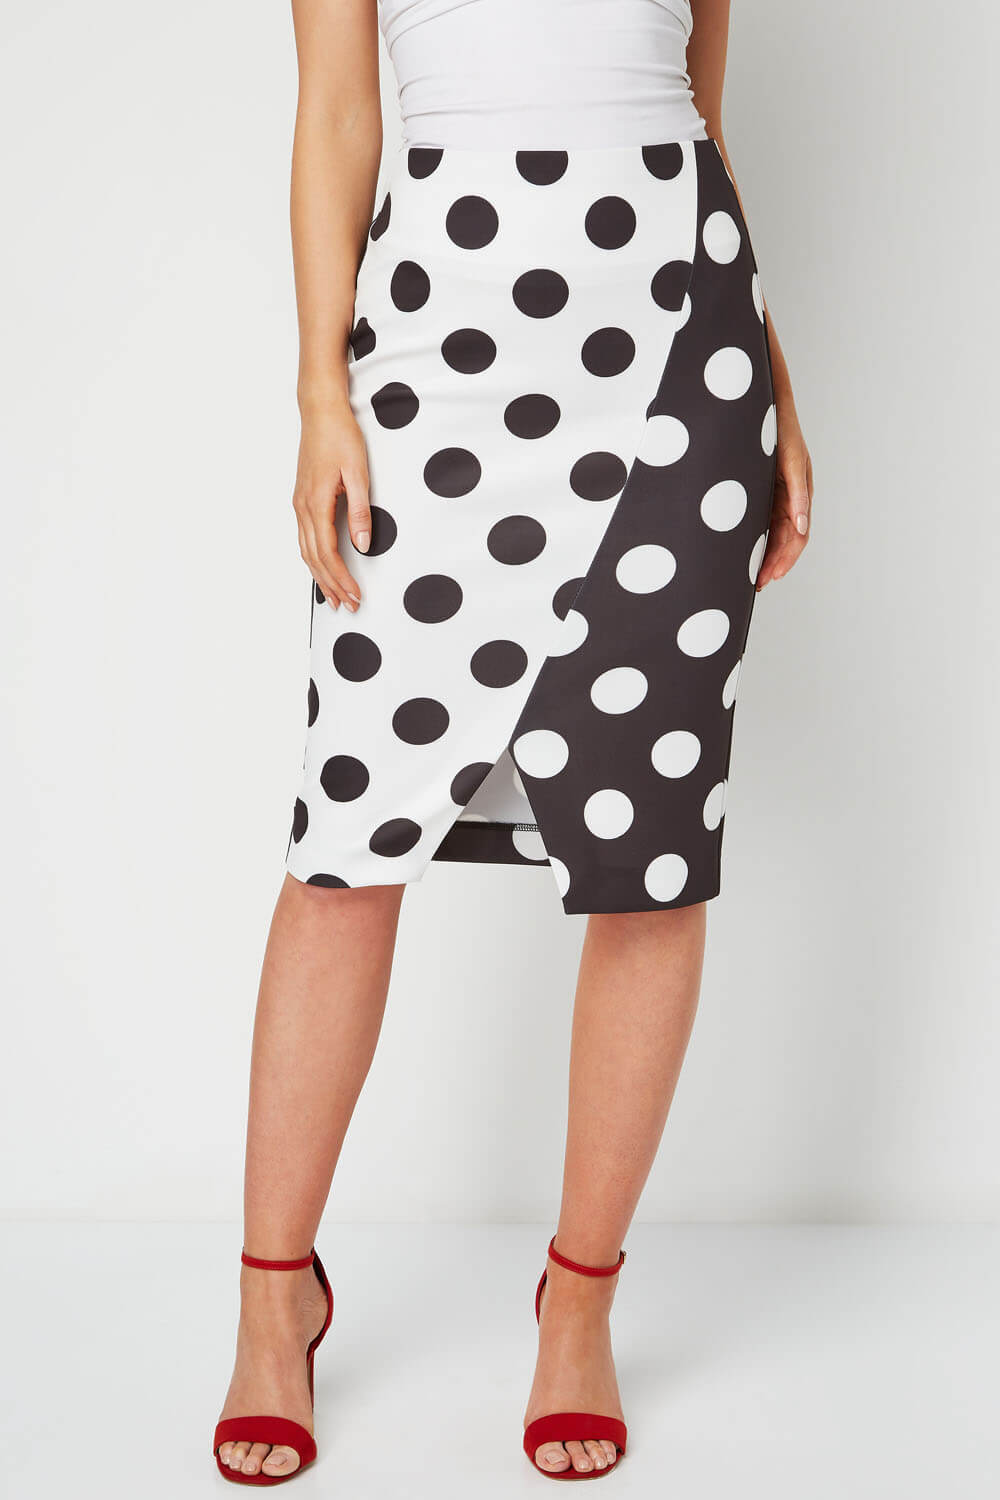 Black Monochrome Spot Scuba Skirt, Image 2 of 5